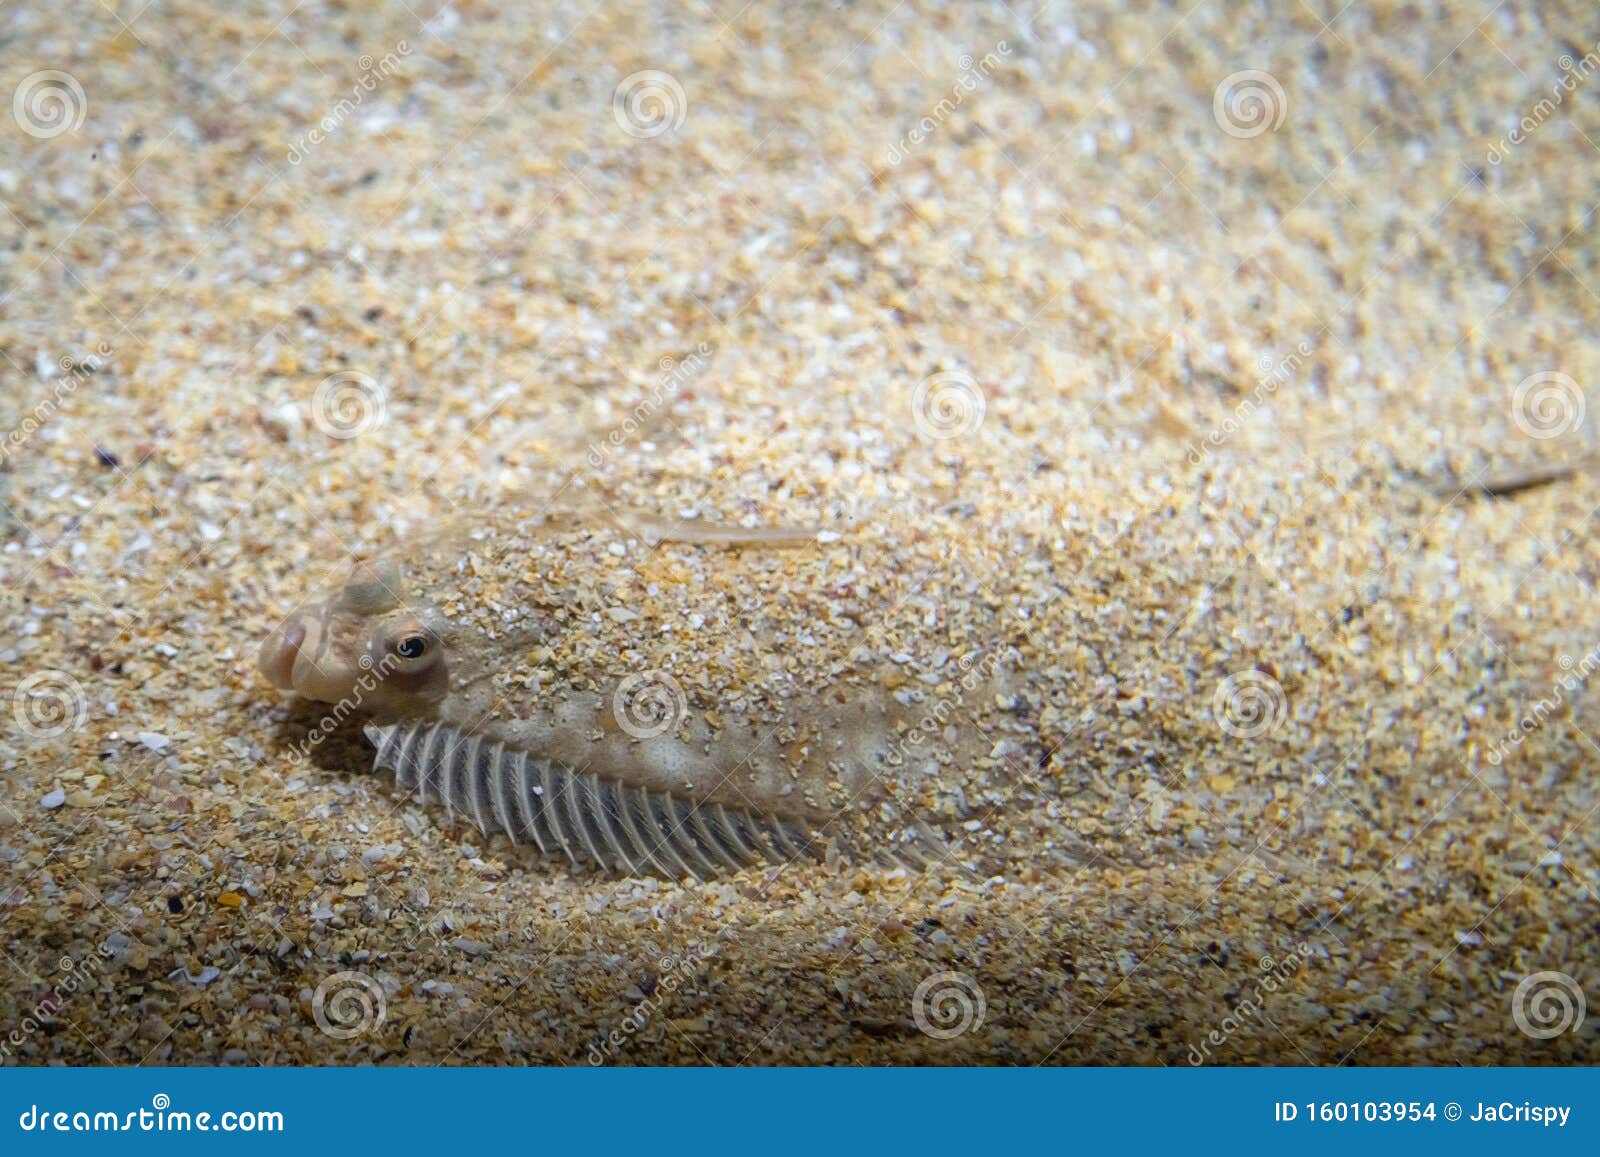 Flatfish - Pleuronectidae. Flat Fish Laying Under the Sand on the Sea  Bottom, Camouflage on the Ocean Floor Stock Photo - Image of nature,  rhombus: 160103954